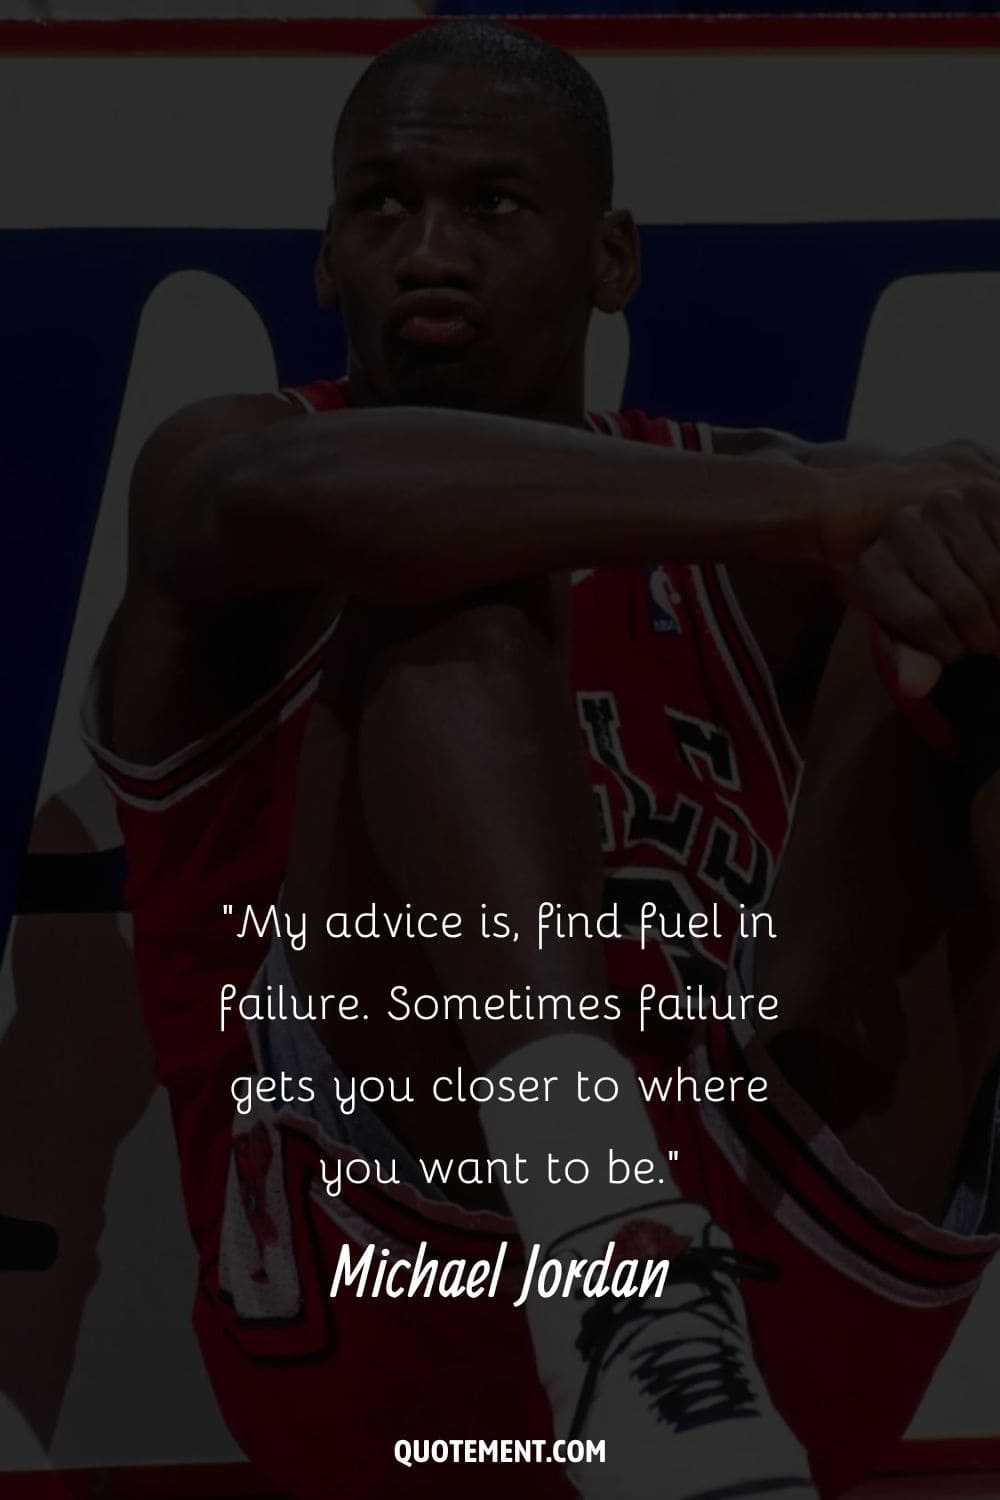 Michael Jordan in a determined seated position representing Michael Jordan fail quote